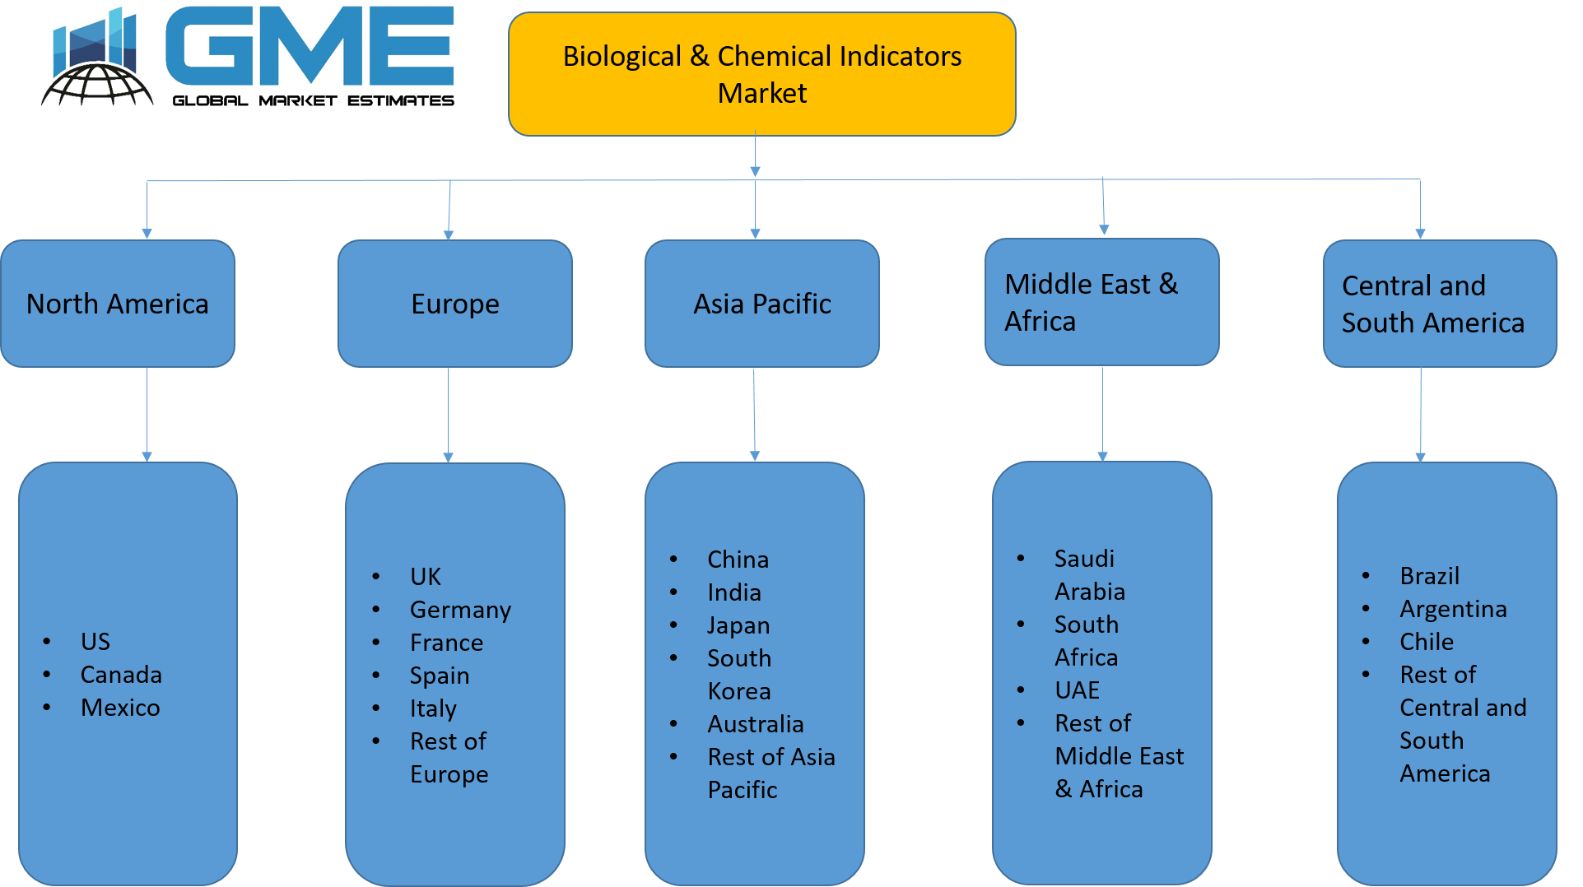 Biological & Chemical Indicators Market